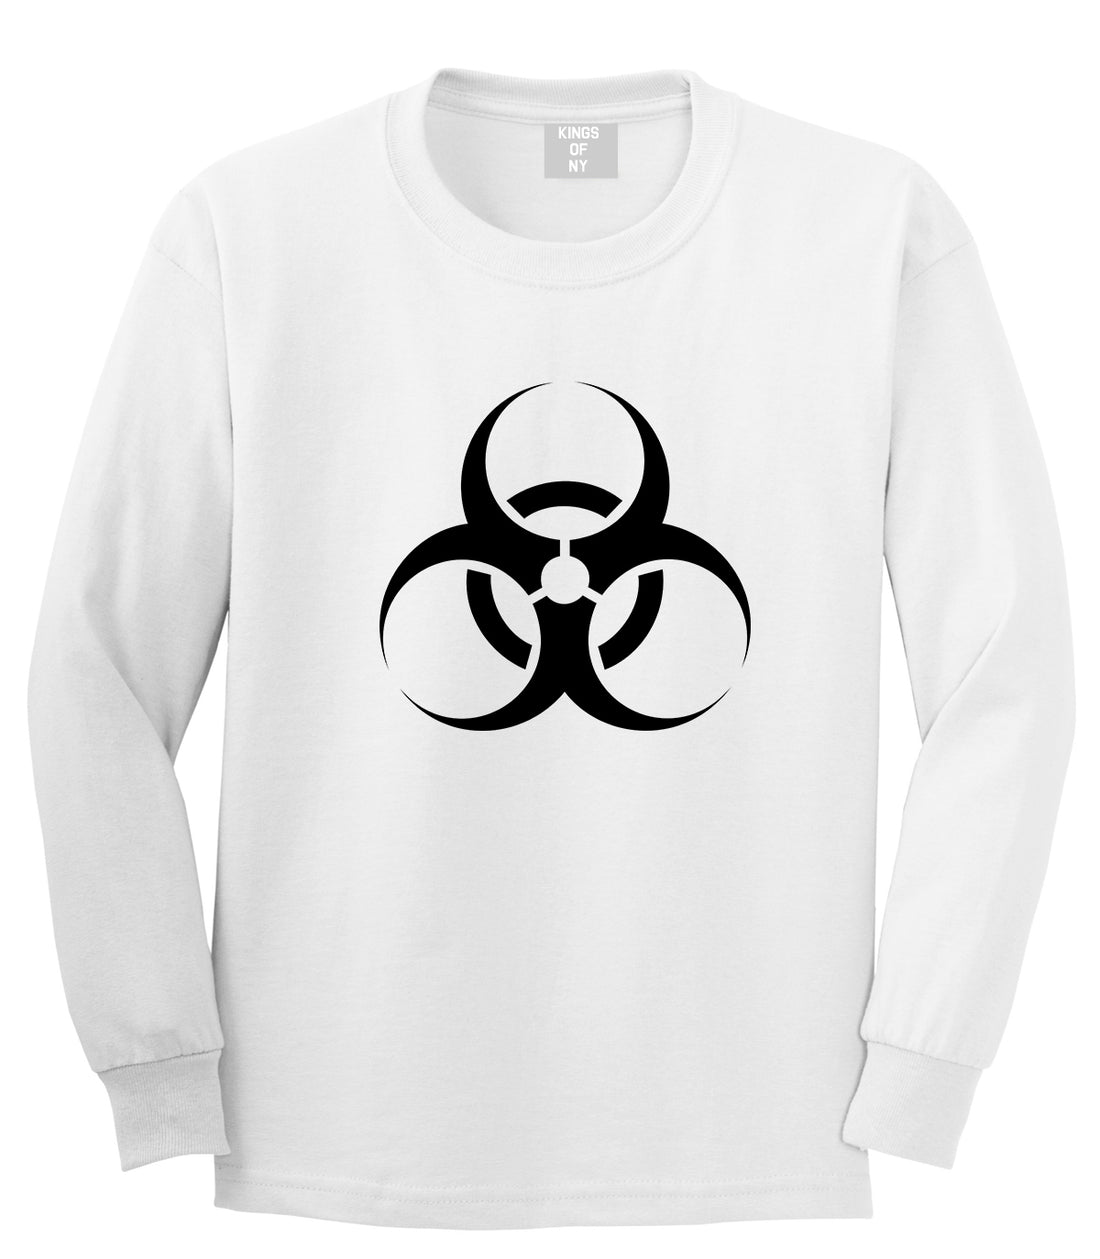 Biohazard Symbol White Long Sleeve T-Shirt by Kings Of NY